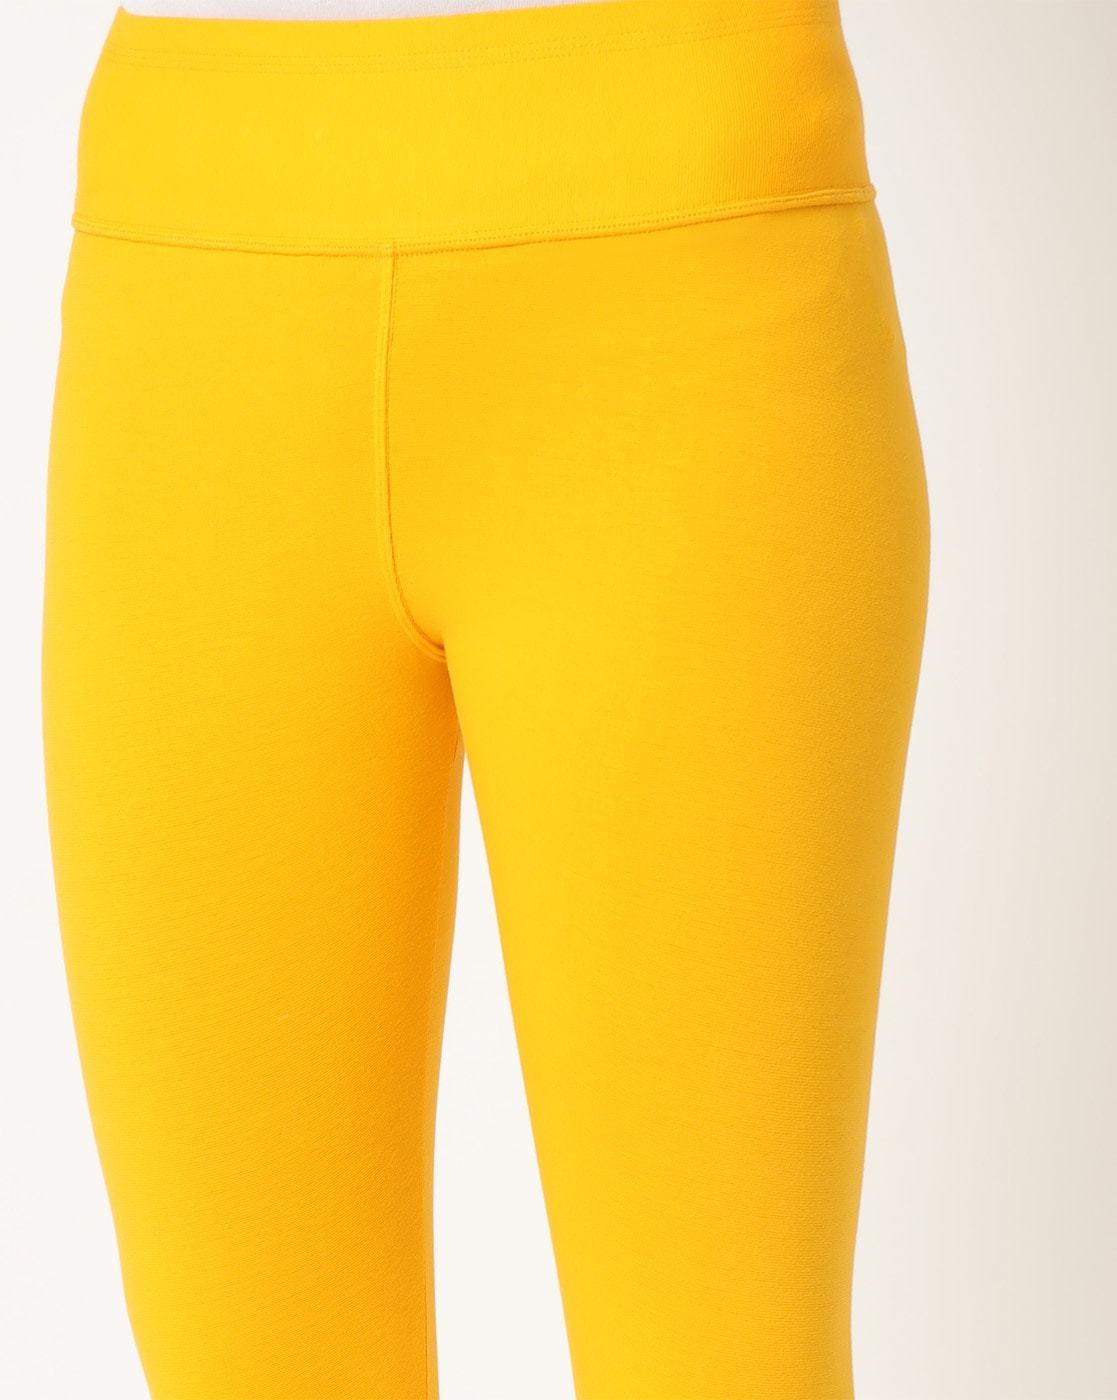 Women's Angle length Cotton Stretch Shapewear Legging Yellow - Stilento